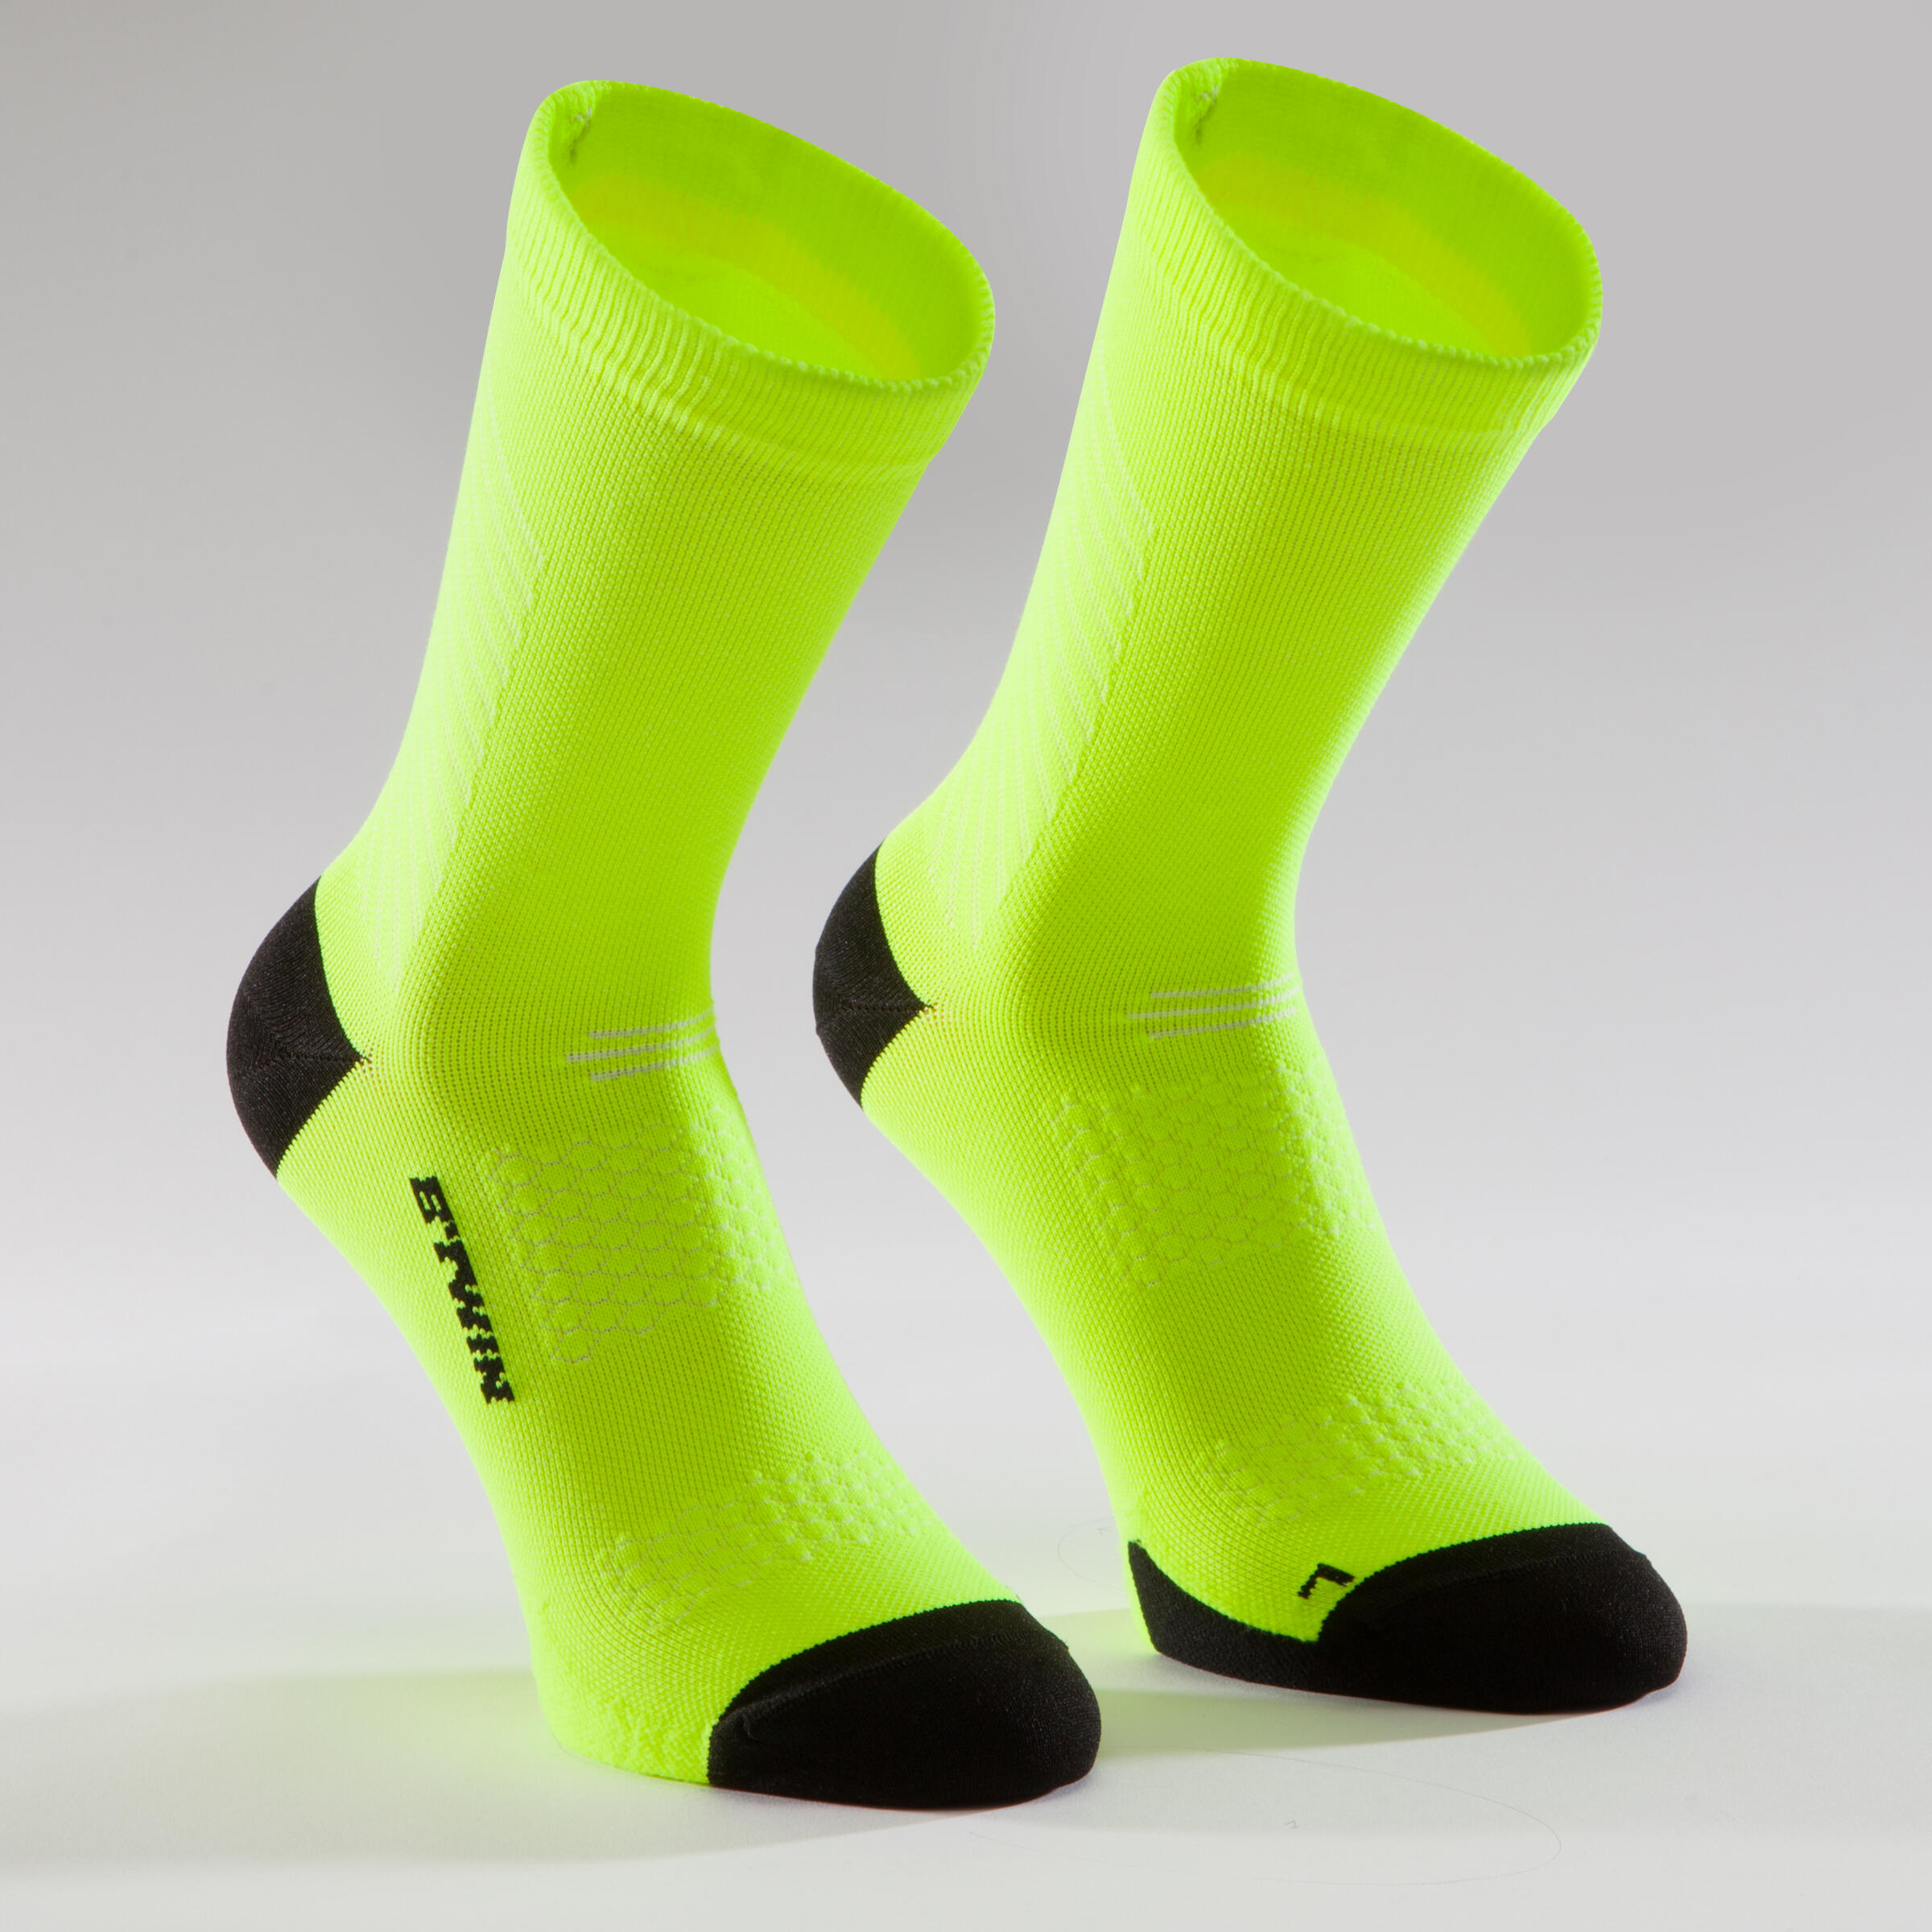 900 Road Cycling Socks - Neon Yellow/Black 3/7